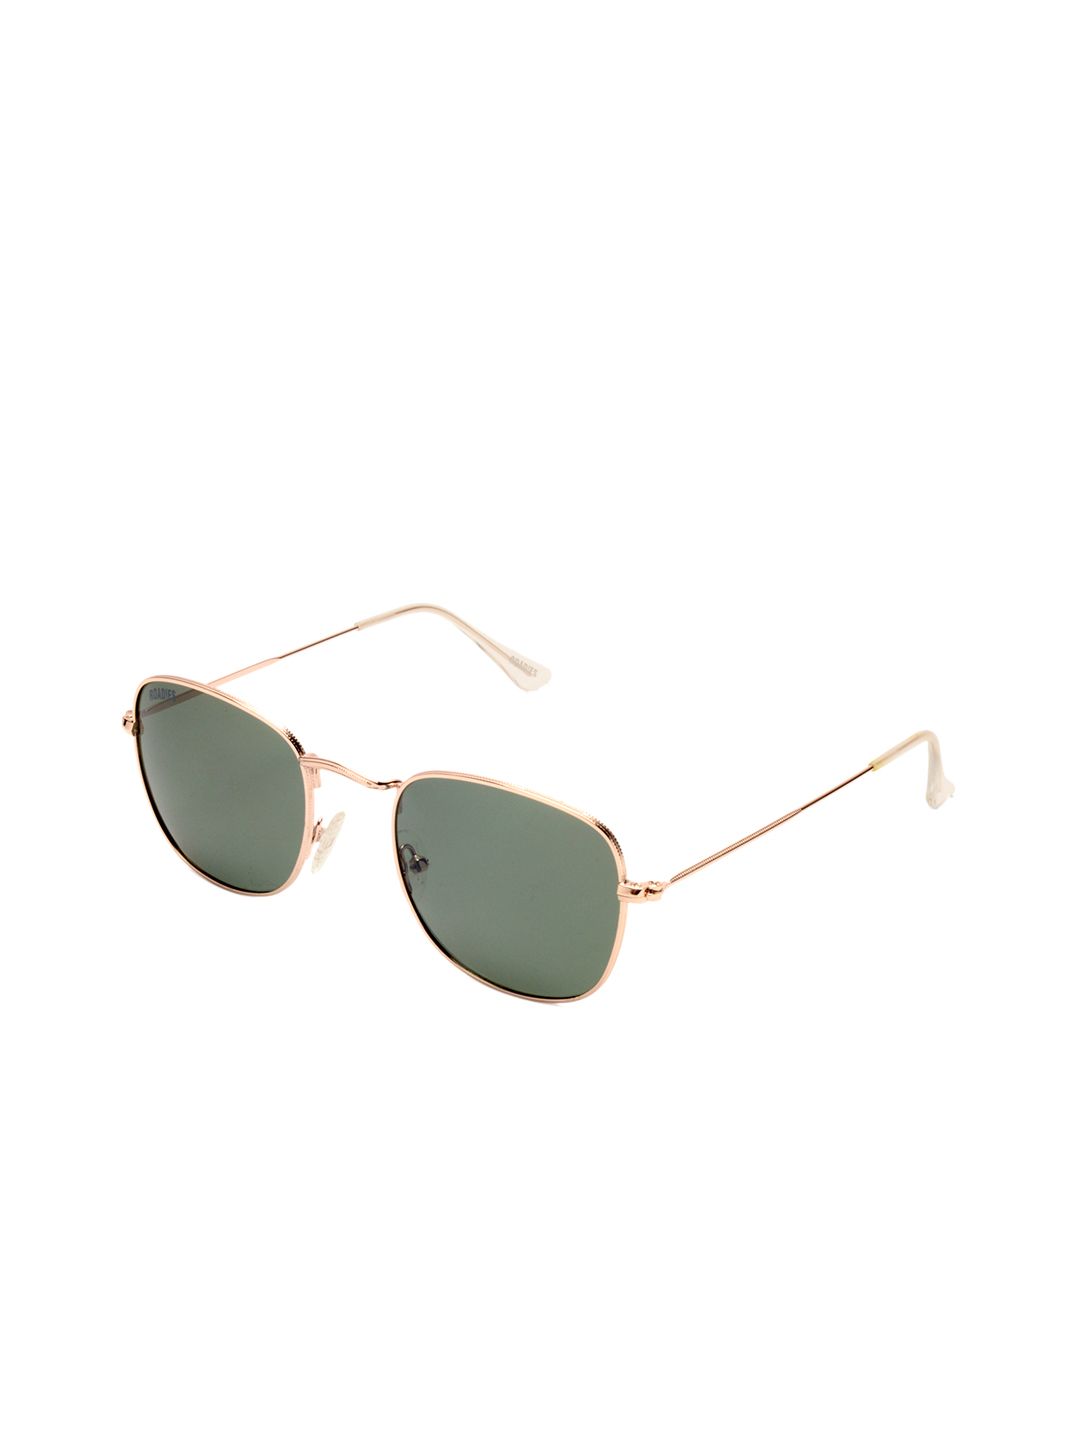 Roadies Unisex Green Lens & Gold-Toned Square Sunglasses with Polarised Lens Price in India